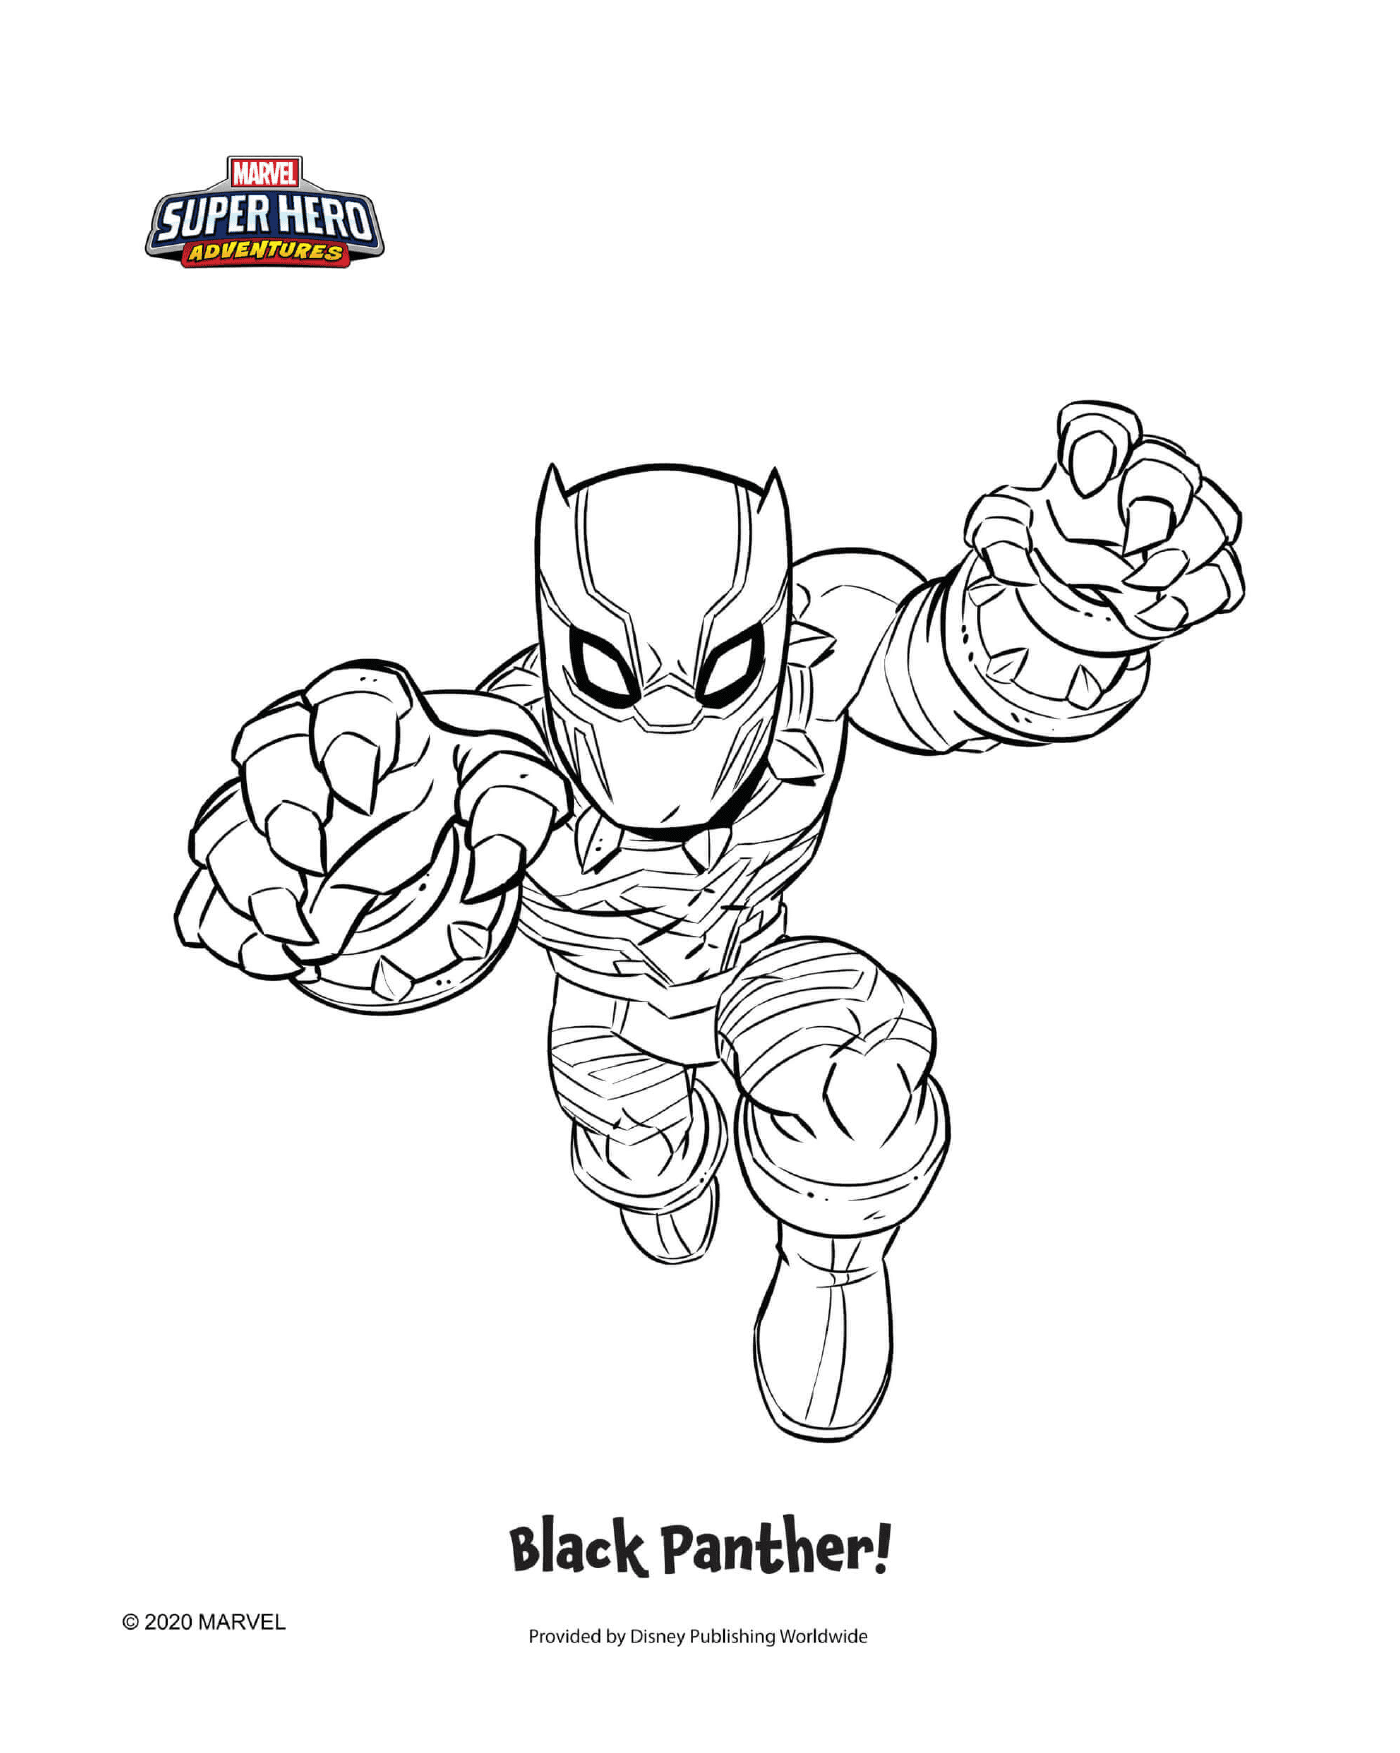  Pantera Negra, um super-herói 